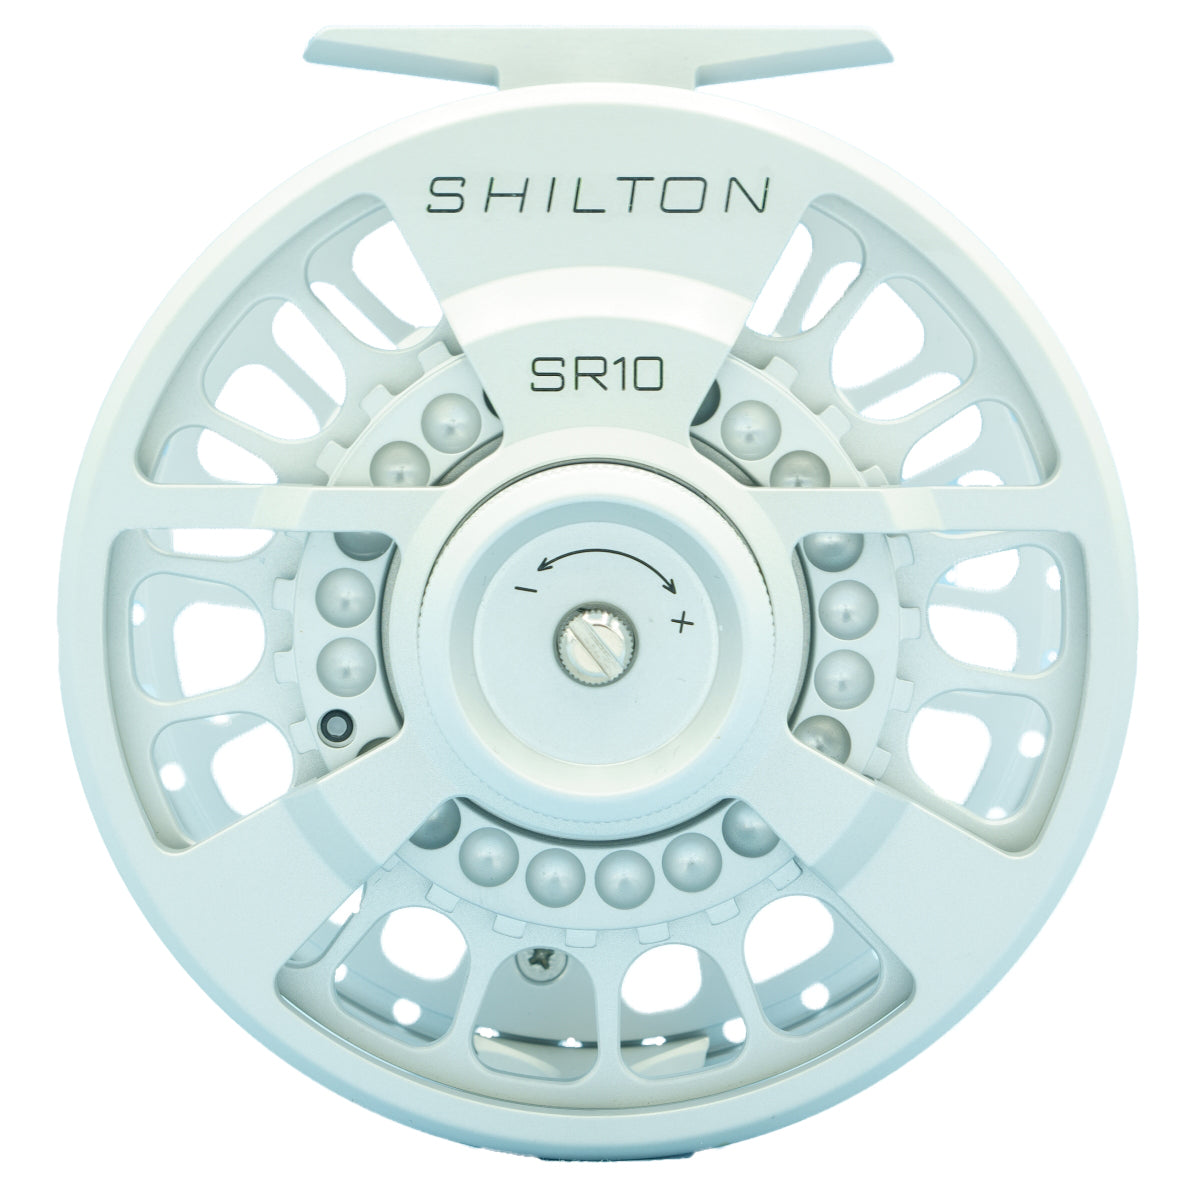 Shilton SR10 (10-11wt) Reel Titanium Left Hand – Madison River Fishing  Company